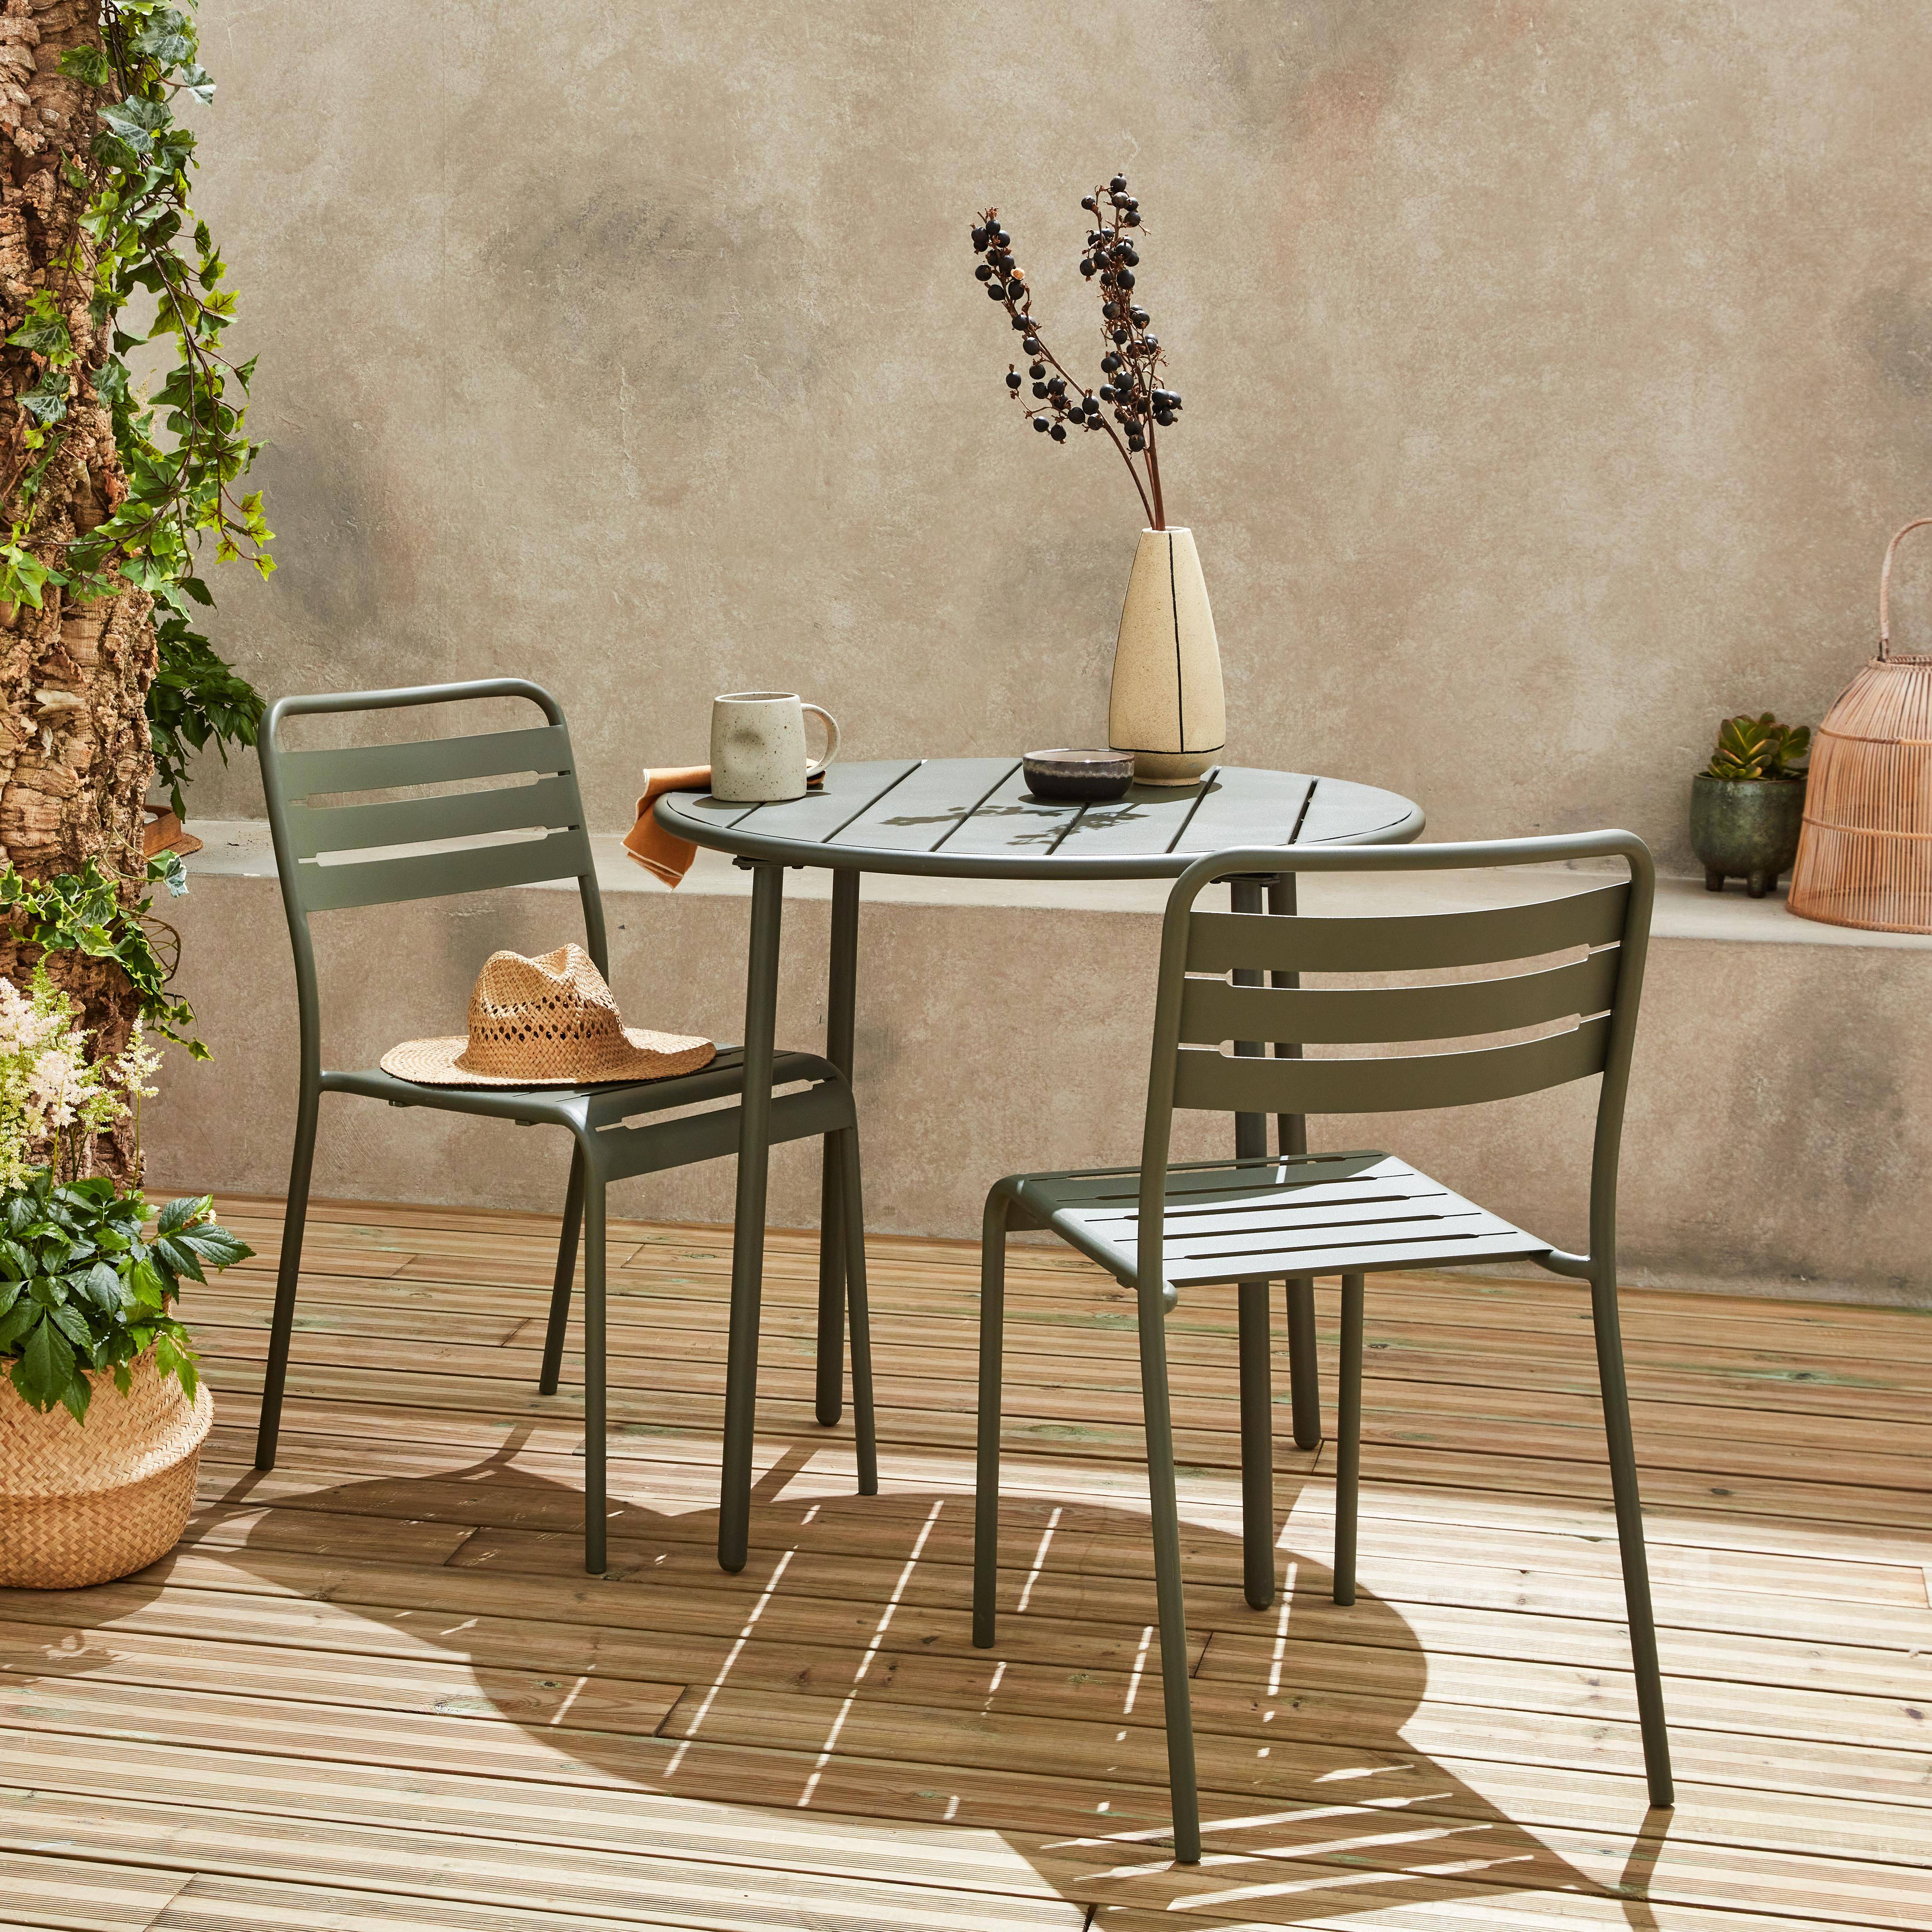 Table de jardin métal savane Amélia avec 2 chaises, traitement antirouille,sweeek,Photo1